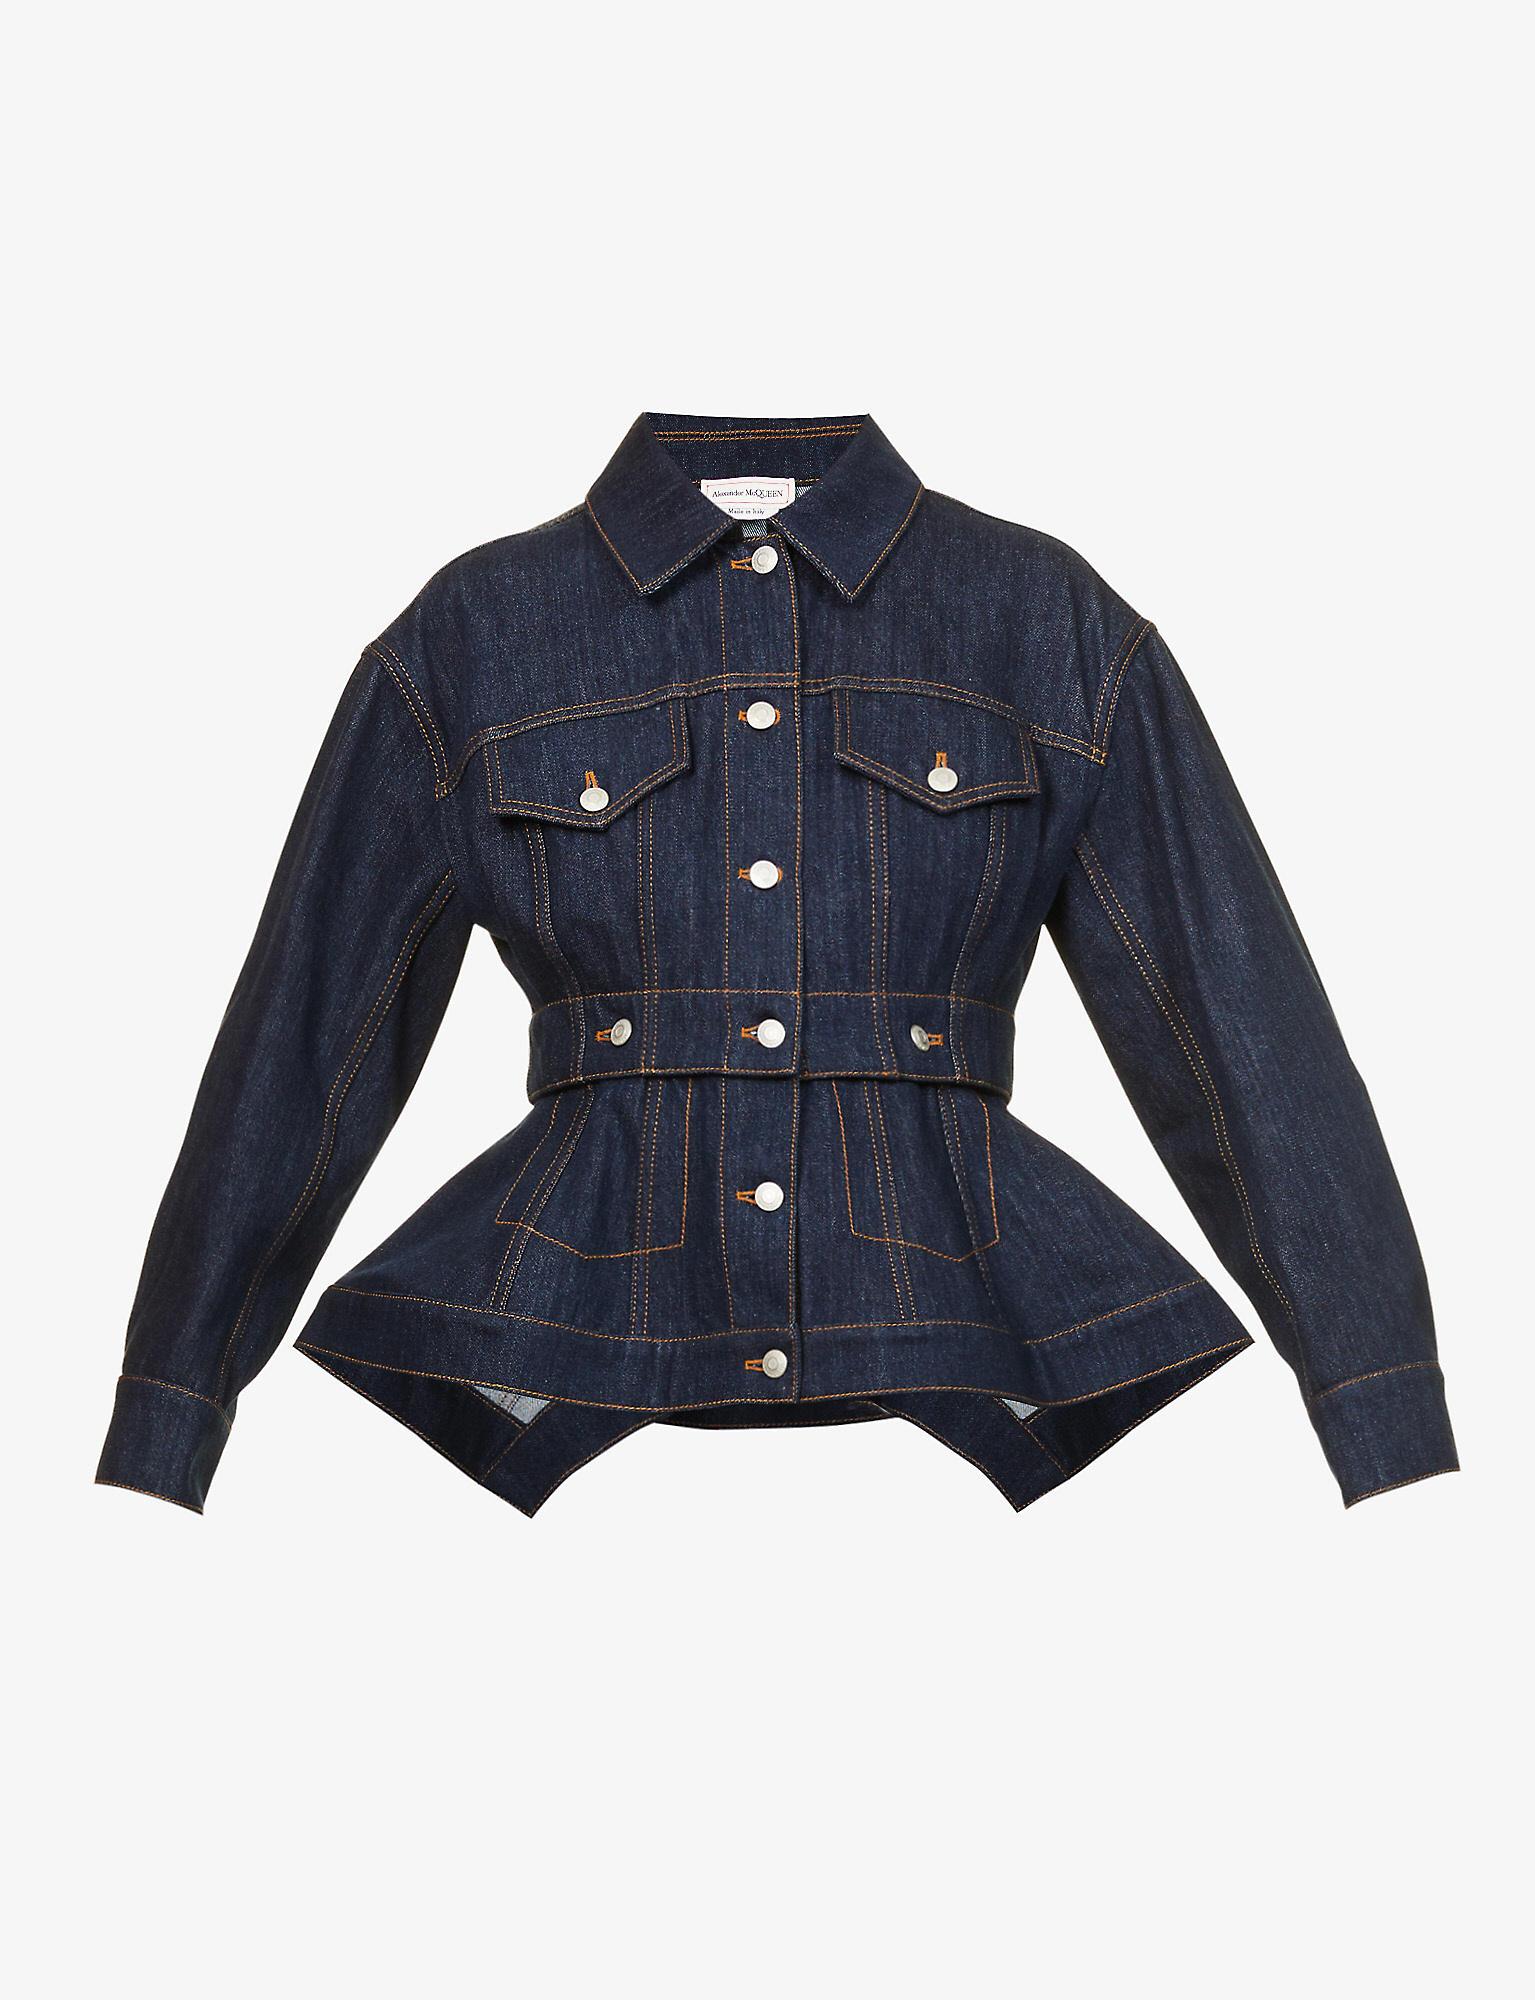 Alexander McQueen Peplum-style Denim Jacket in Blue | Lyst